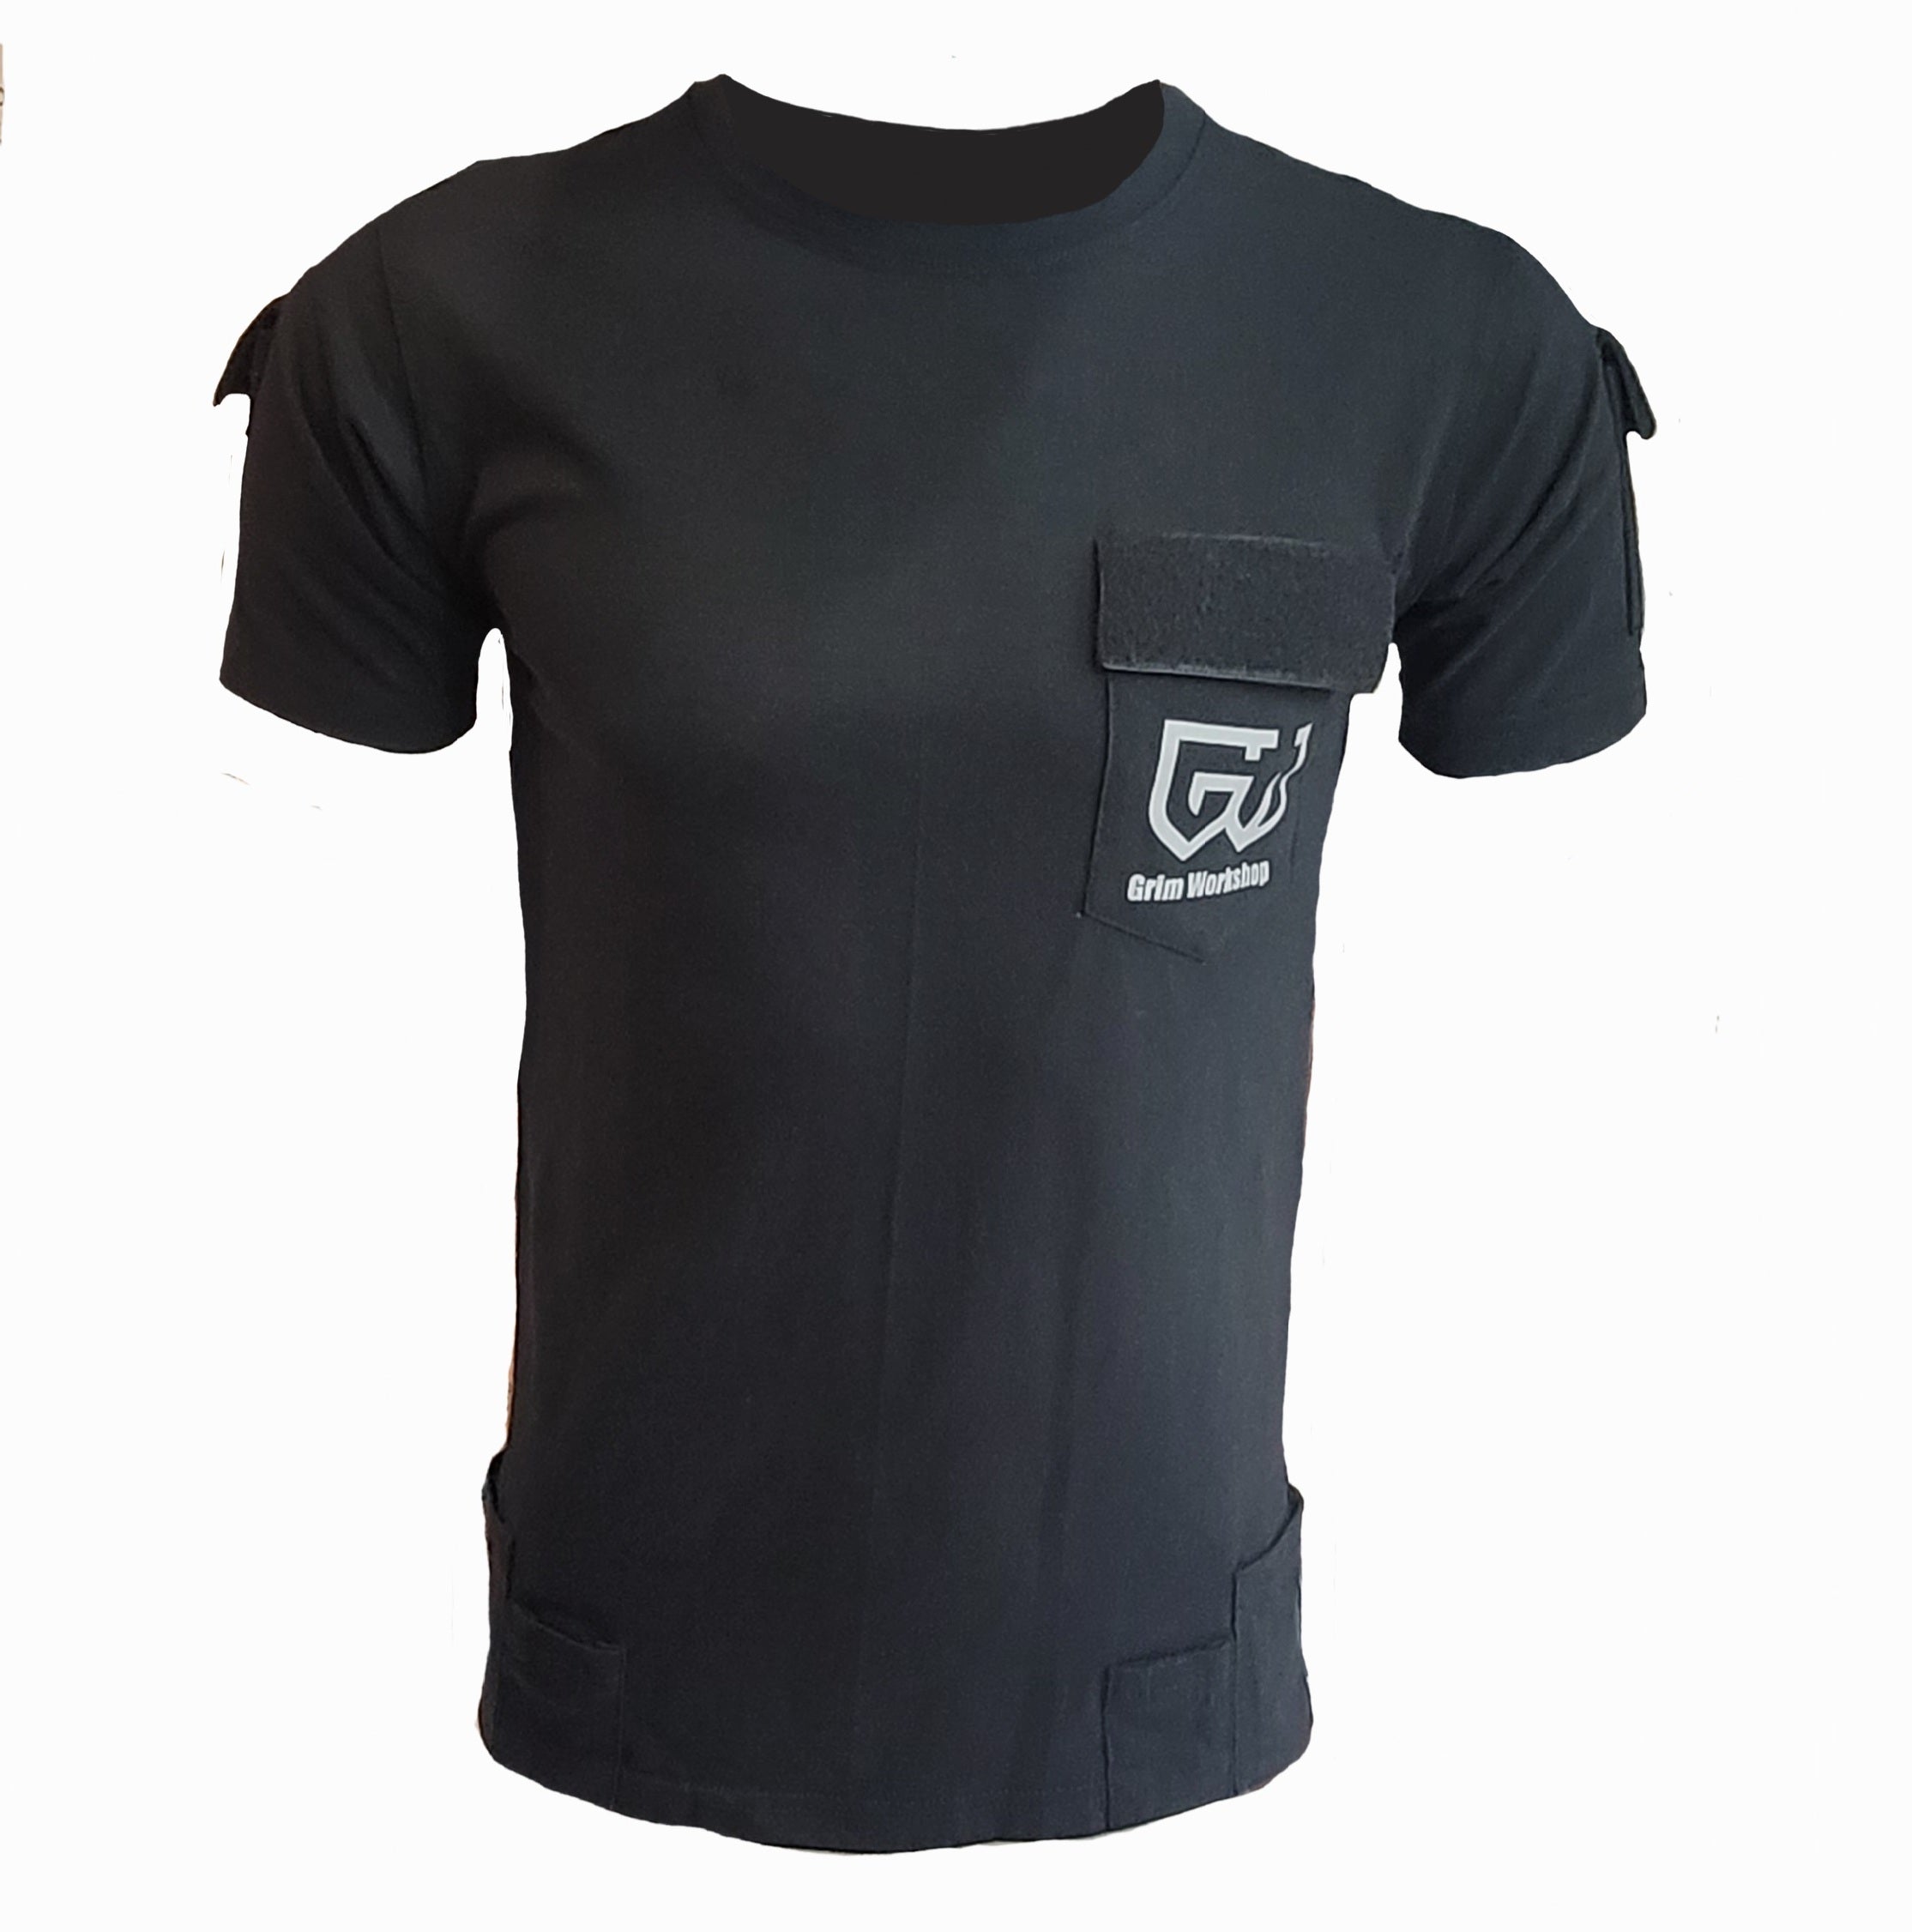 Tactical shirt edc clothing with hidden pocket great survival clothing and tactical shirt Tactical t shirts with velcro edc shirt with hidden pocket